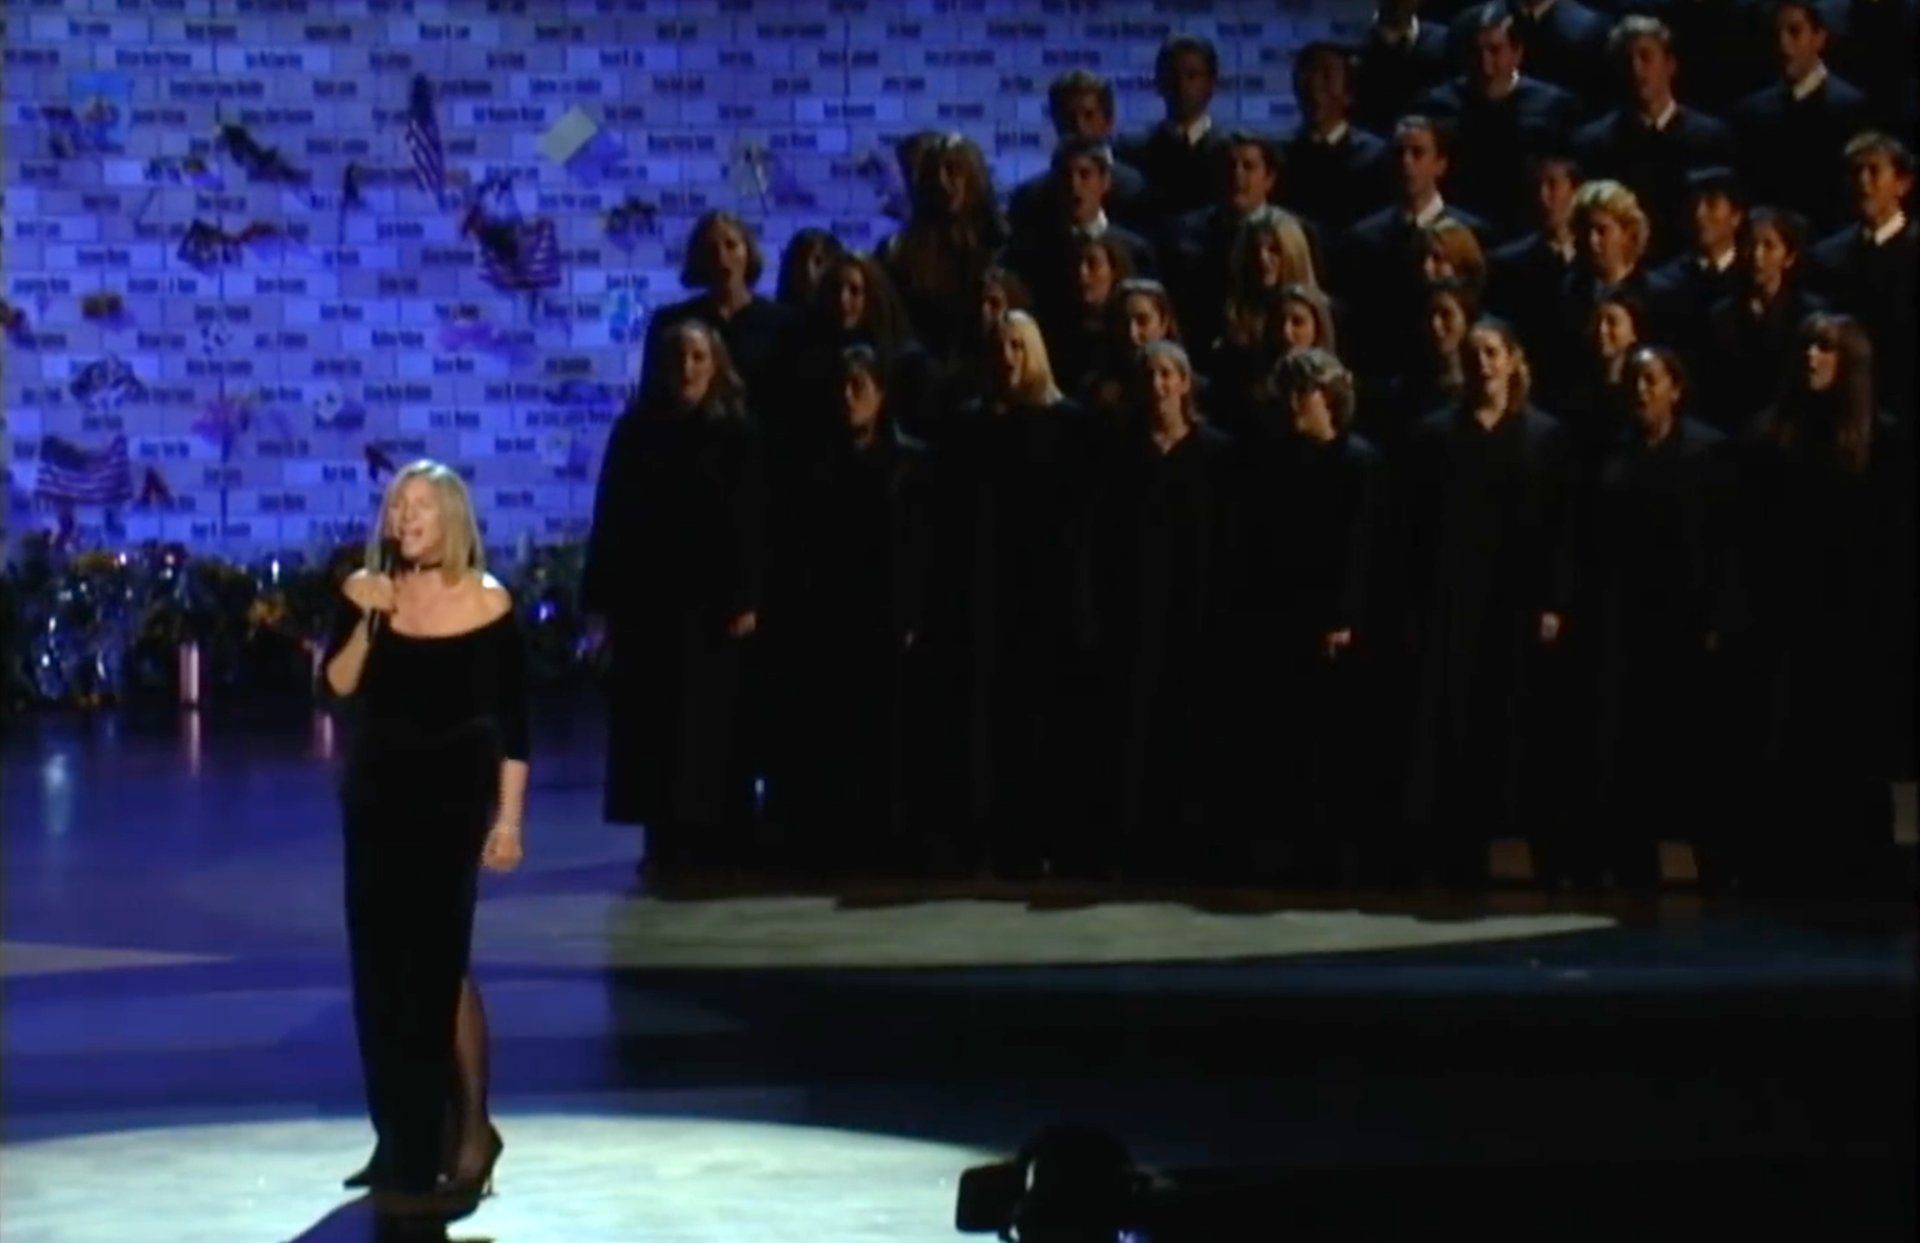 Streisand and choir sing 